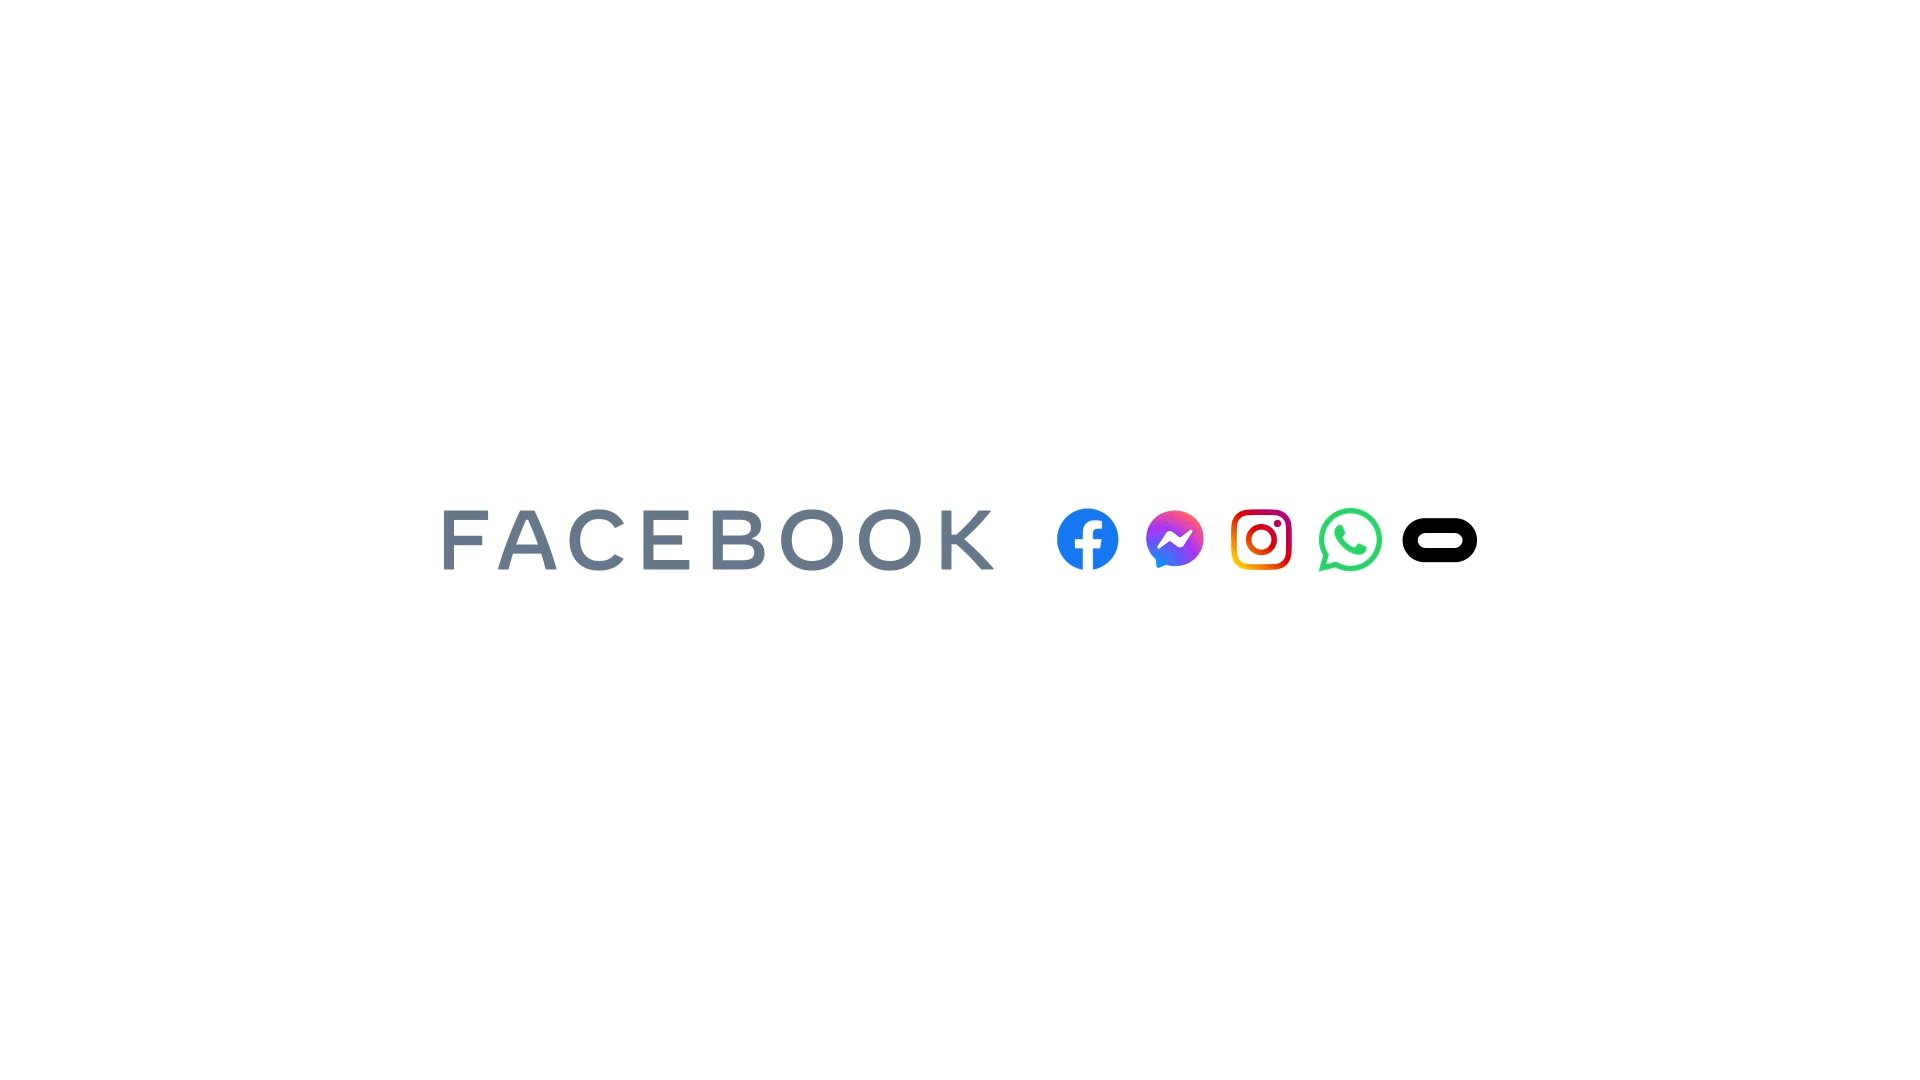 facebook is rebranding itself as meta wilson s media oakland raider logo history medium